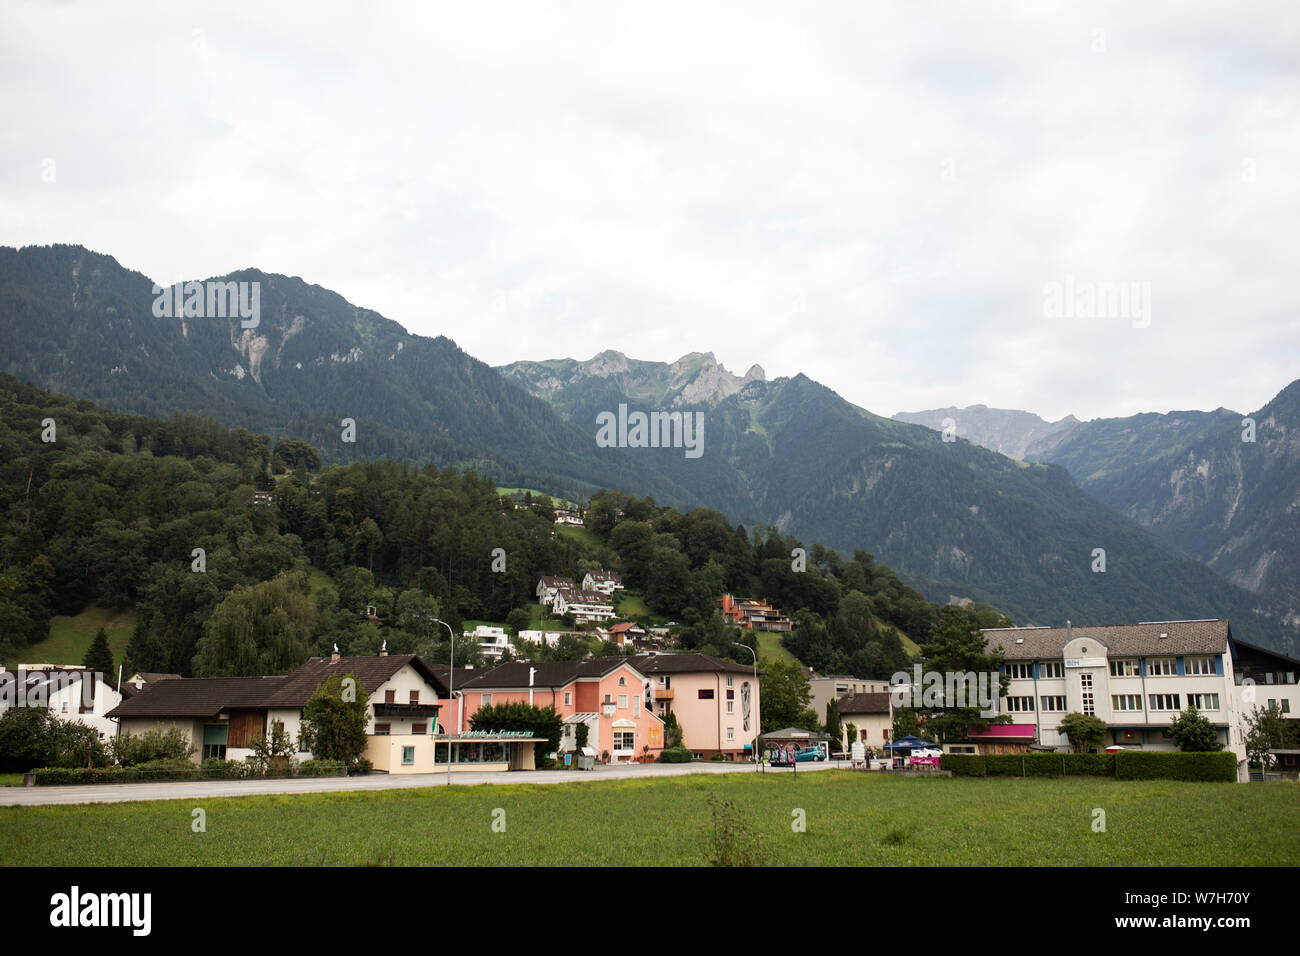 La città di Vaduz, Liechtenstein, nelle alpi tra Svizzera e Austria. Foto Stock